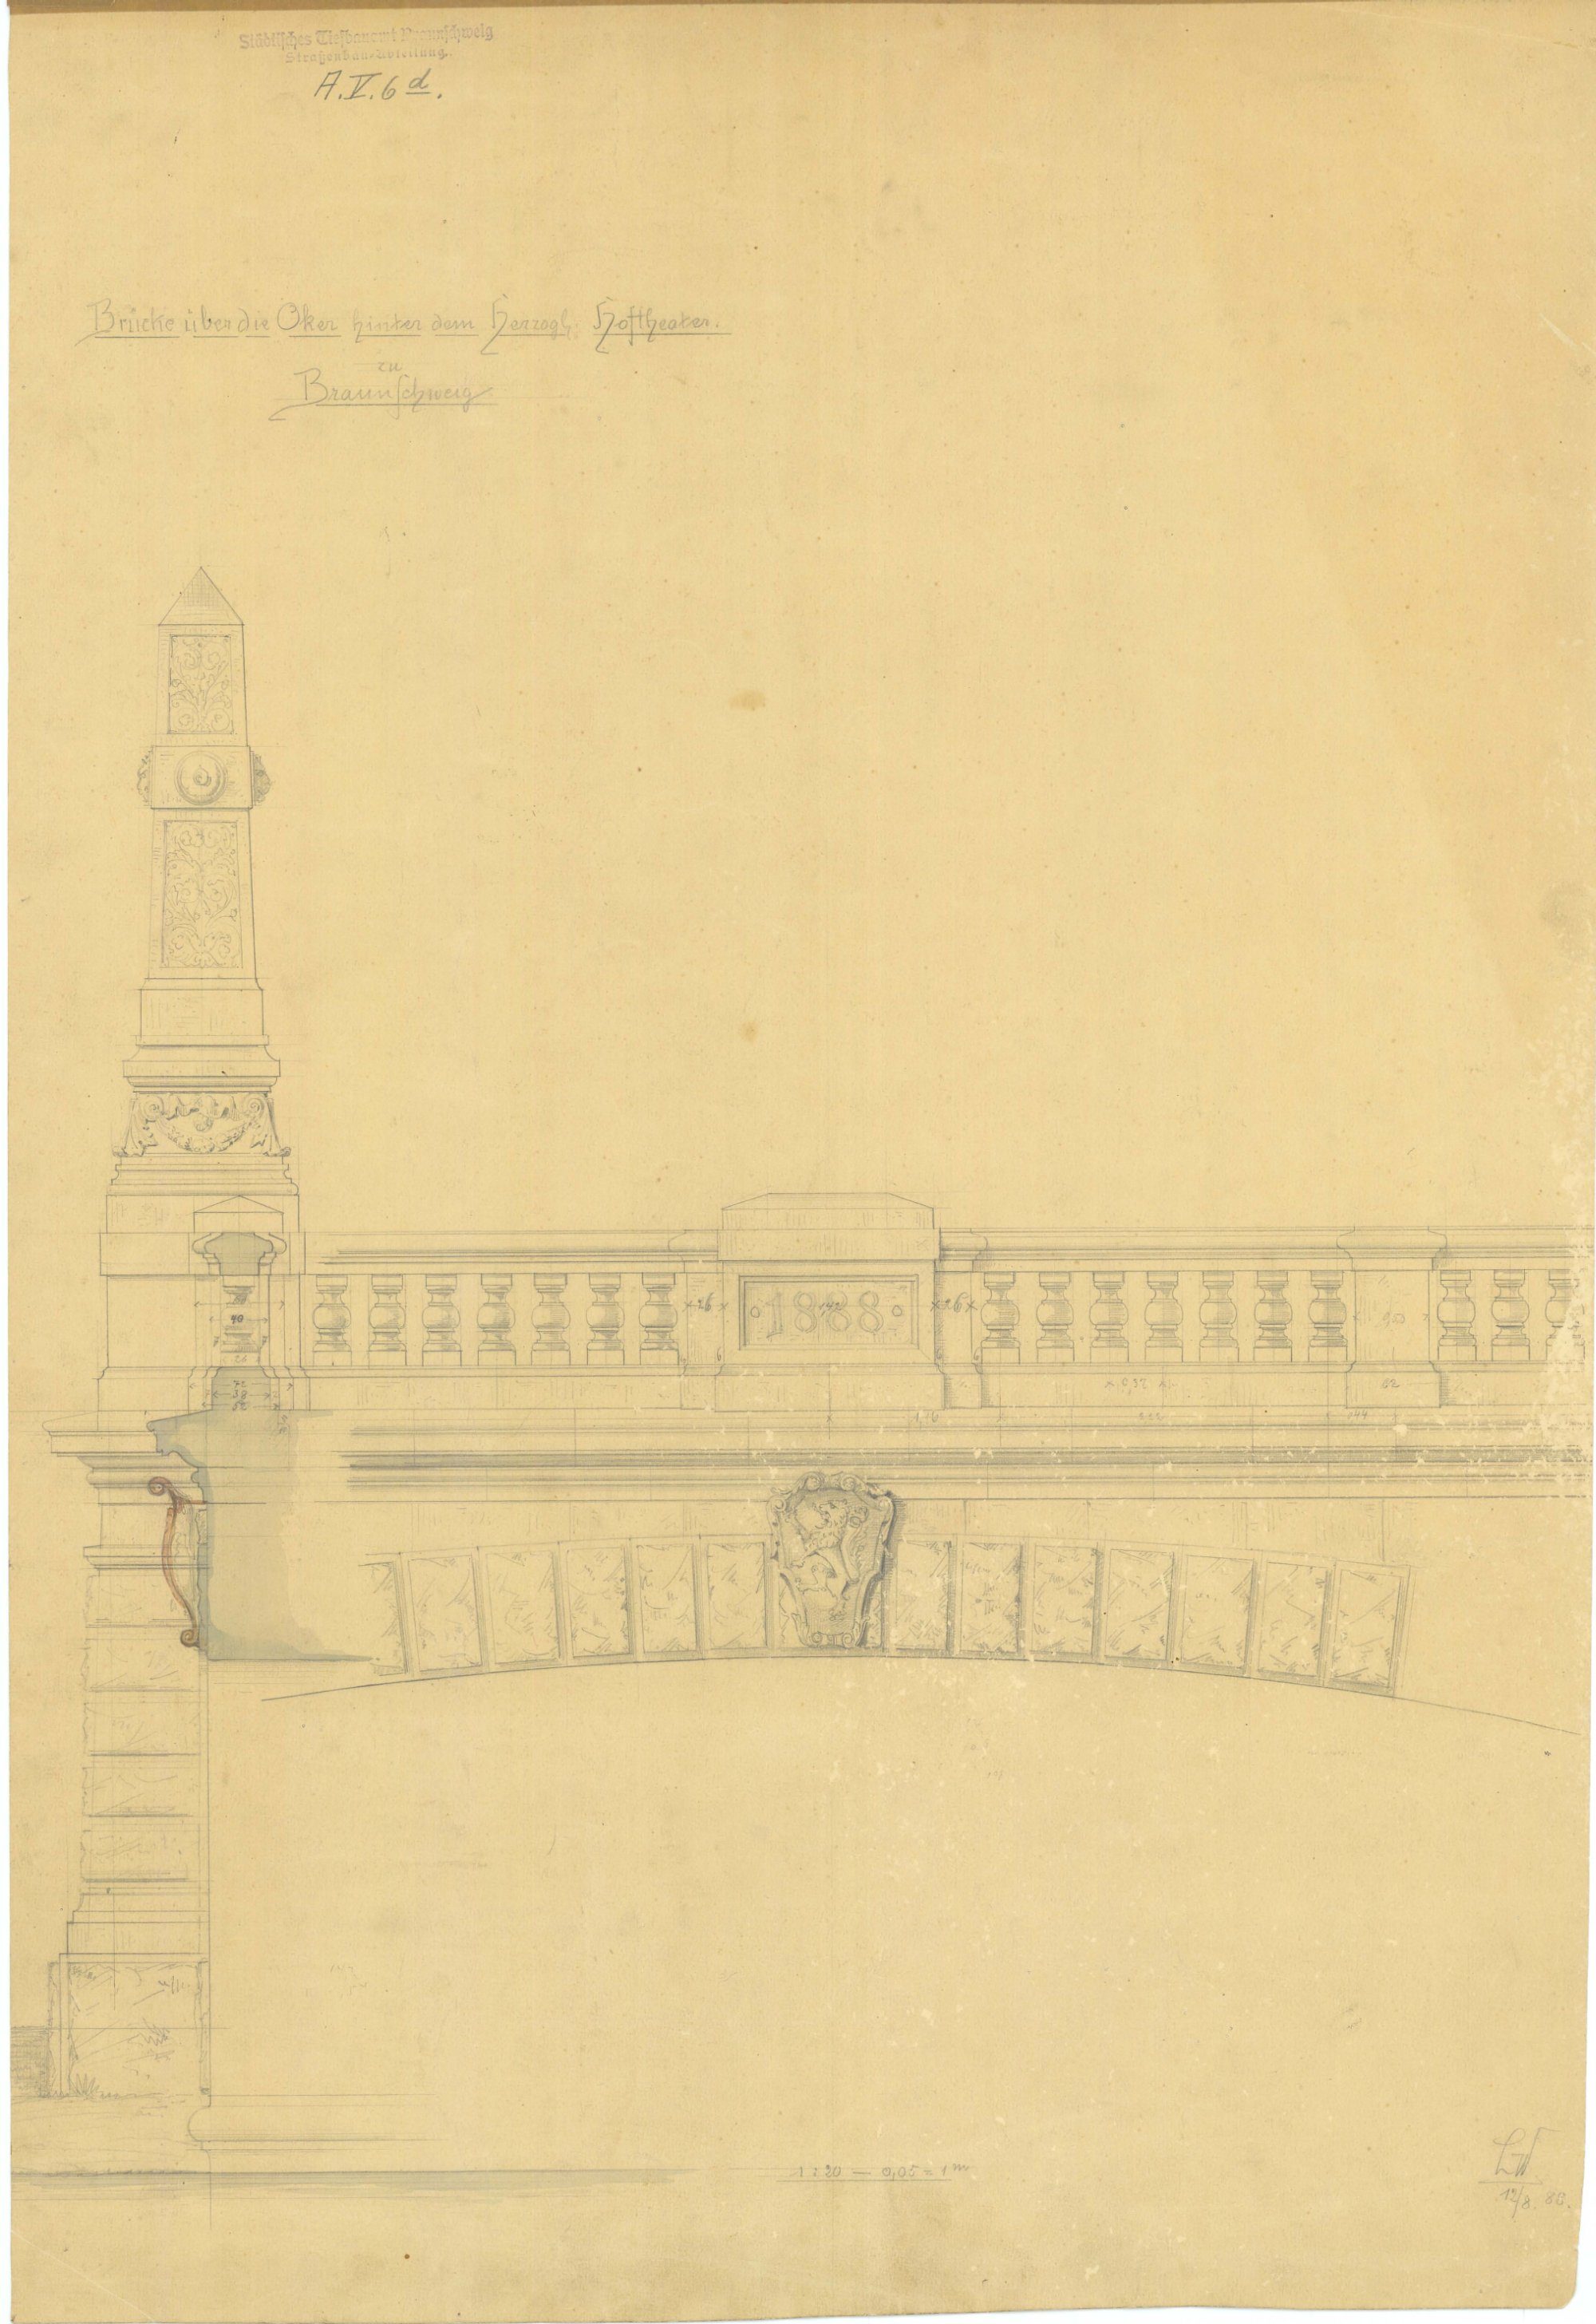 Theaterbrücke, Eckpostament der Brüstung, 1888 (Wird bei Klick vergrößert)